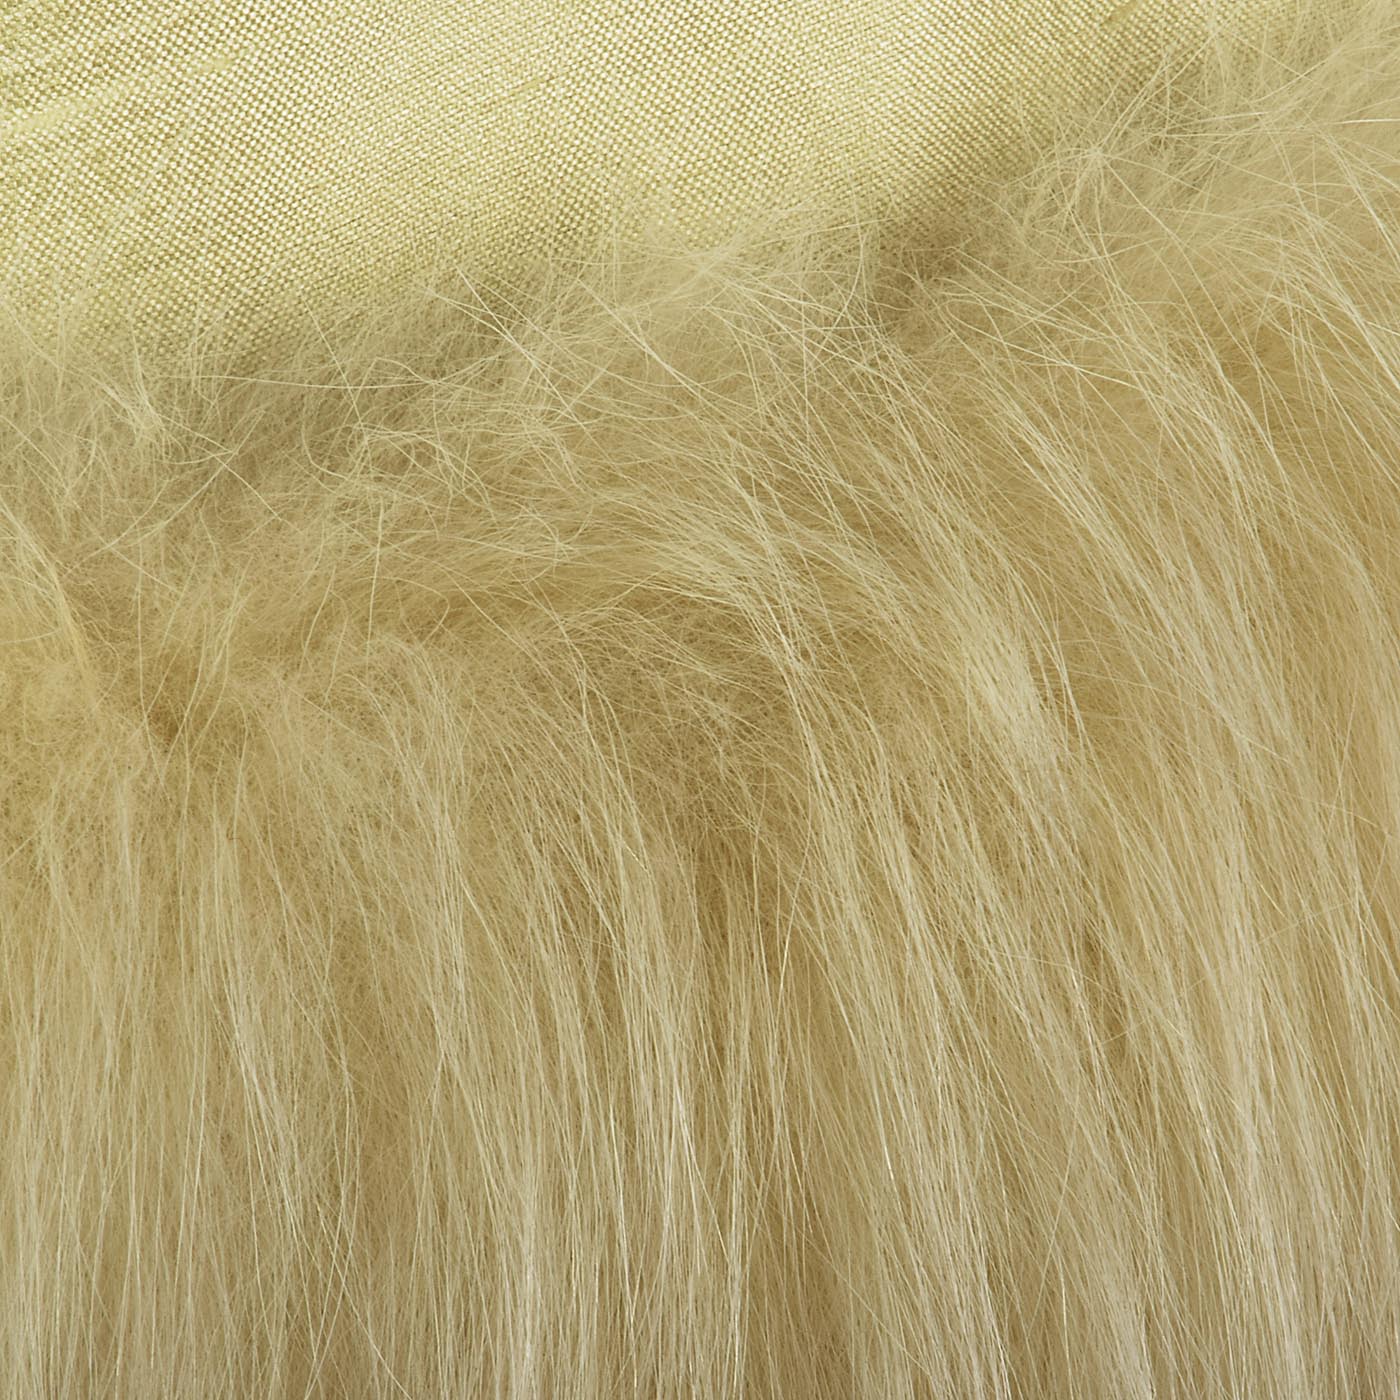 1960s Yellow Silk Cape with Fox Fur Trim